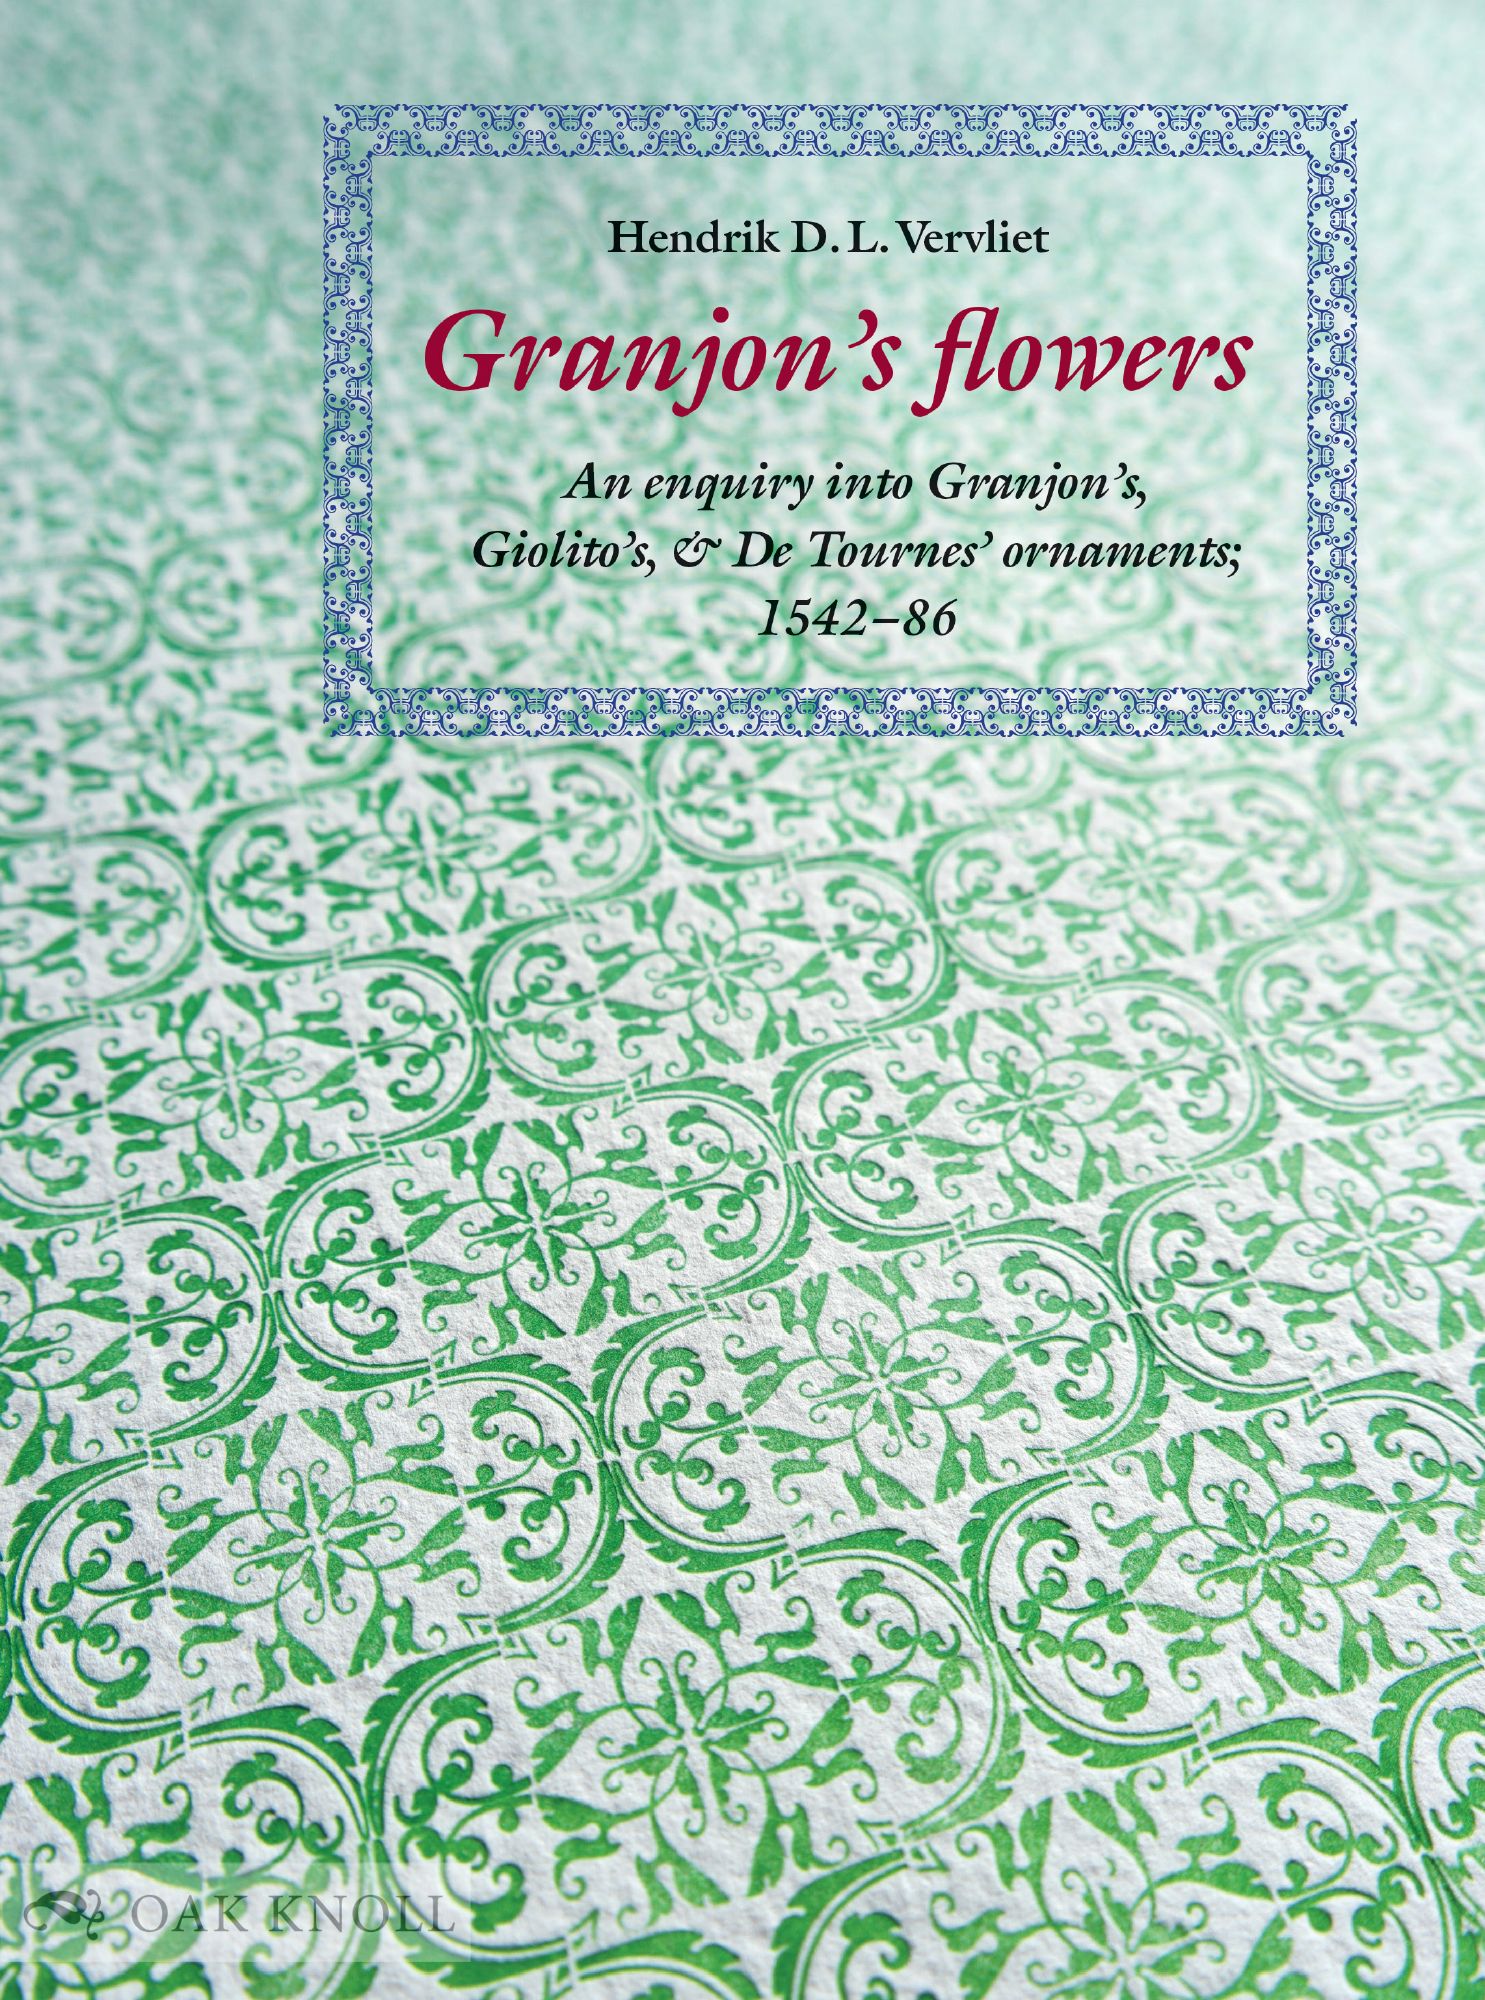 Granjon’s Flowers: An Enquiry Into Granjon’s, Giolito’s, and De Tournes’ Ornaments